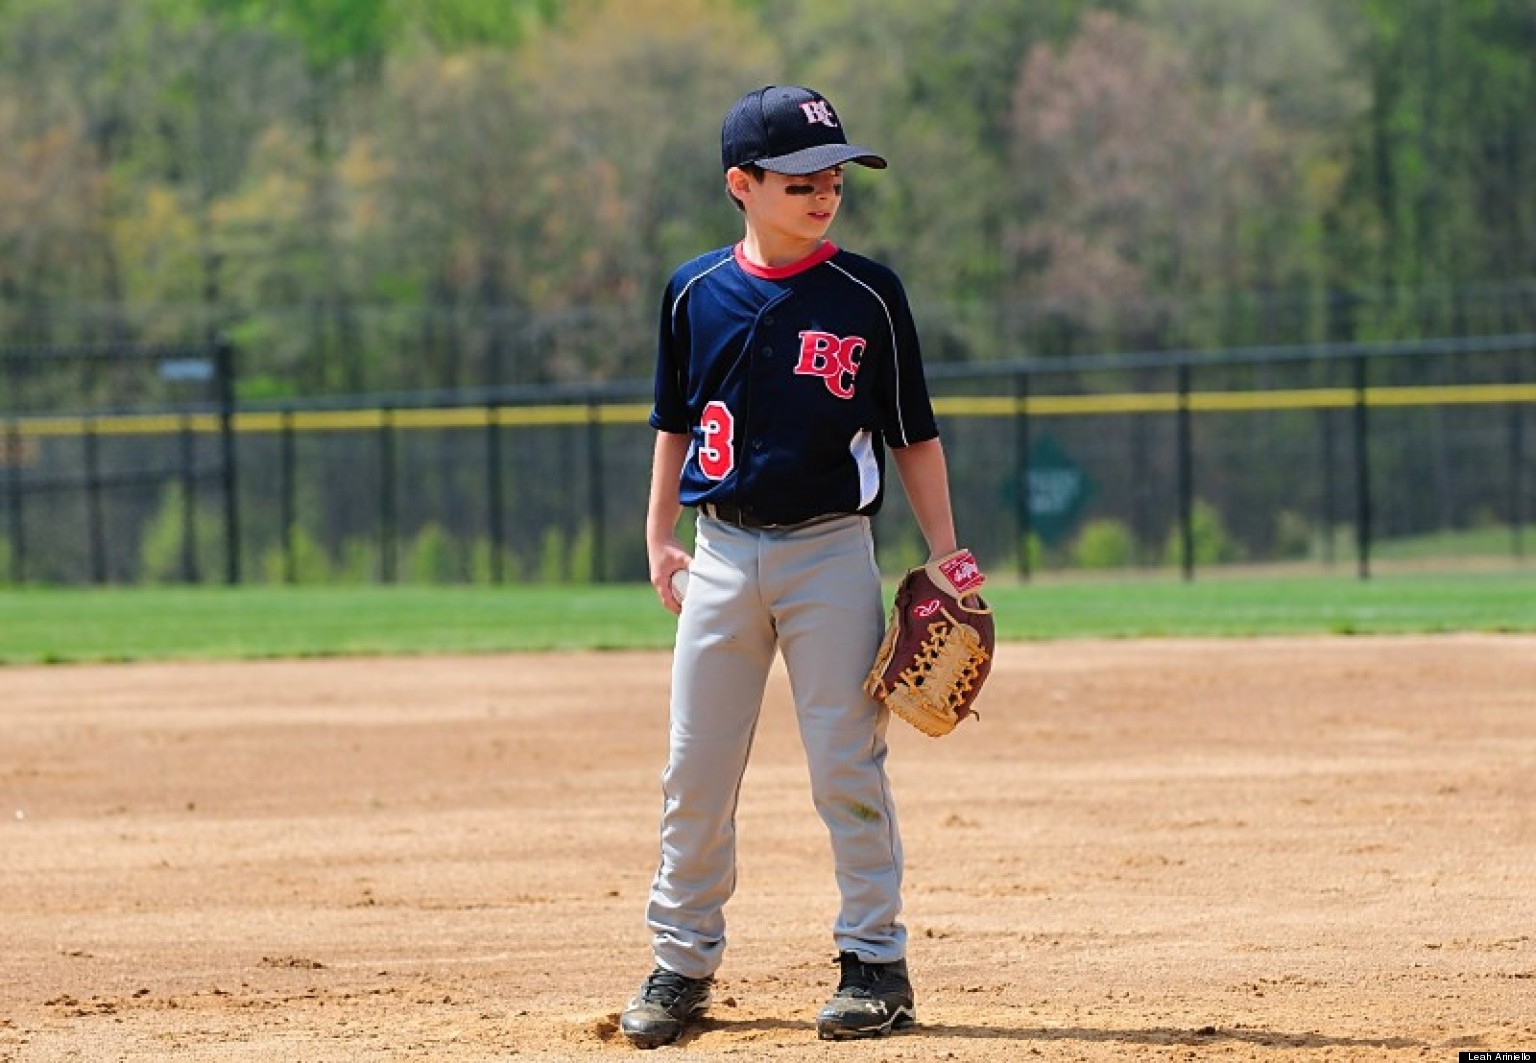 Gallery Photos of "Boy Batting In A Baseball" 